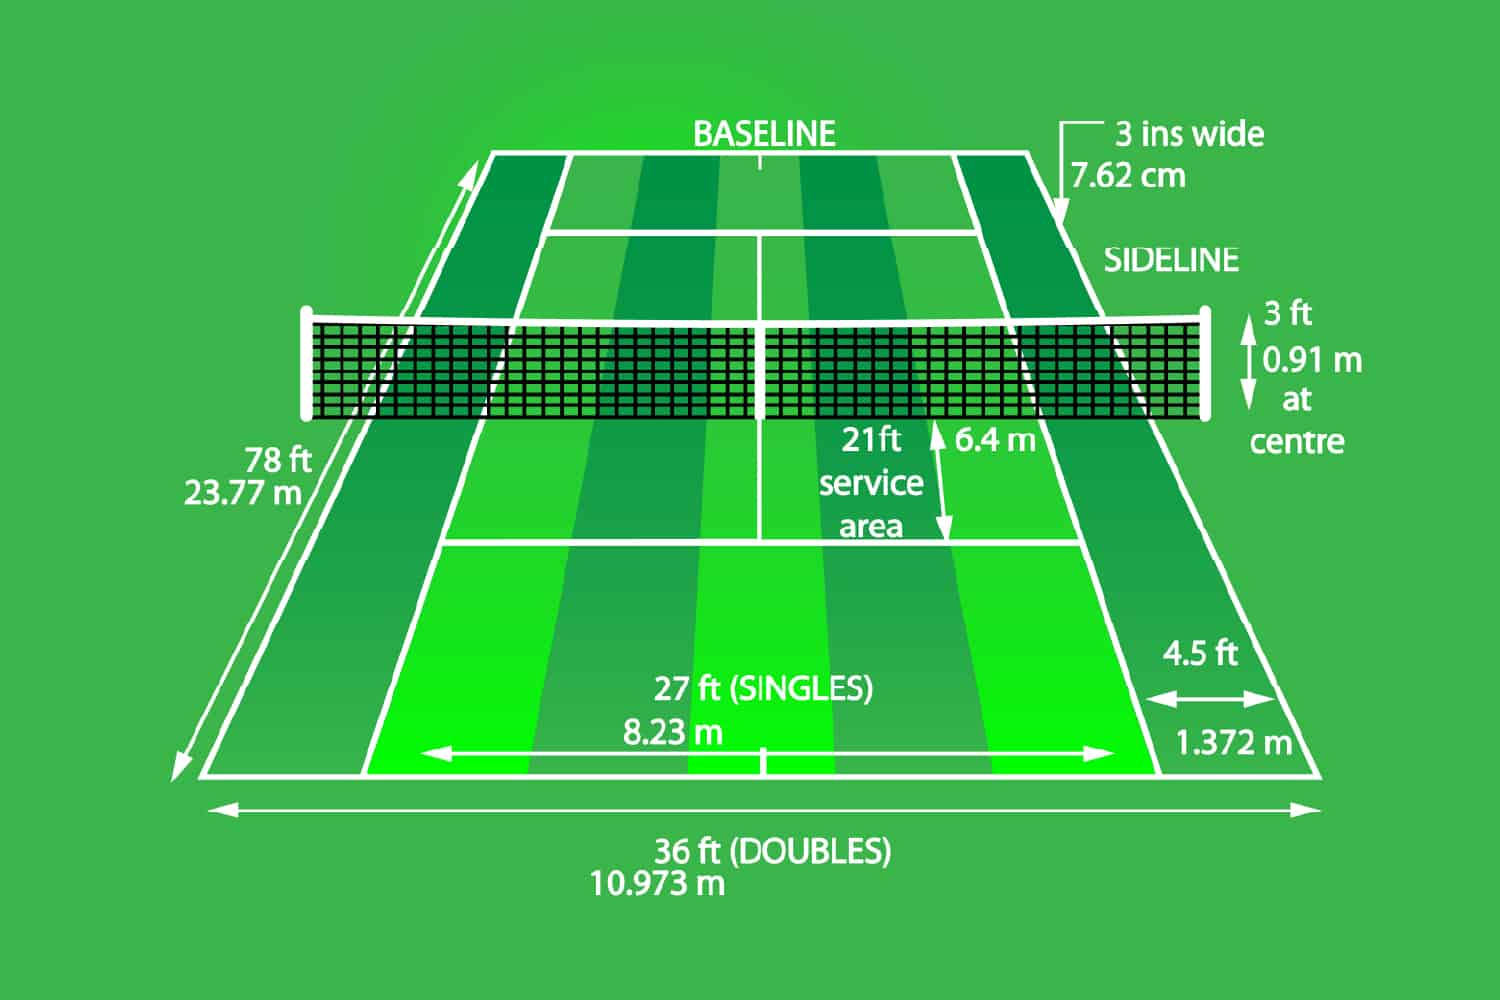 Tennis Court Dimensions 